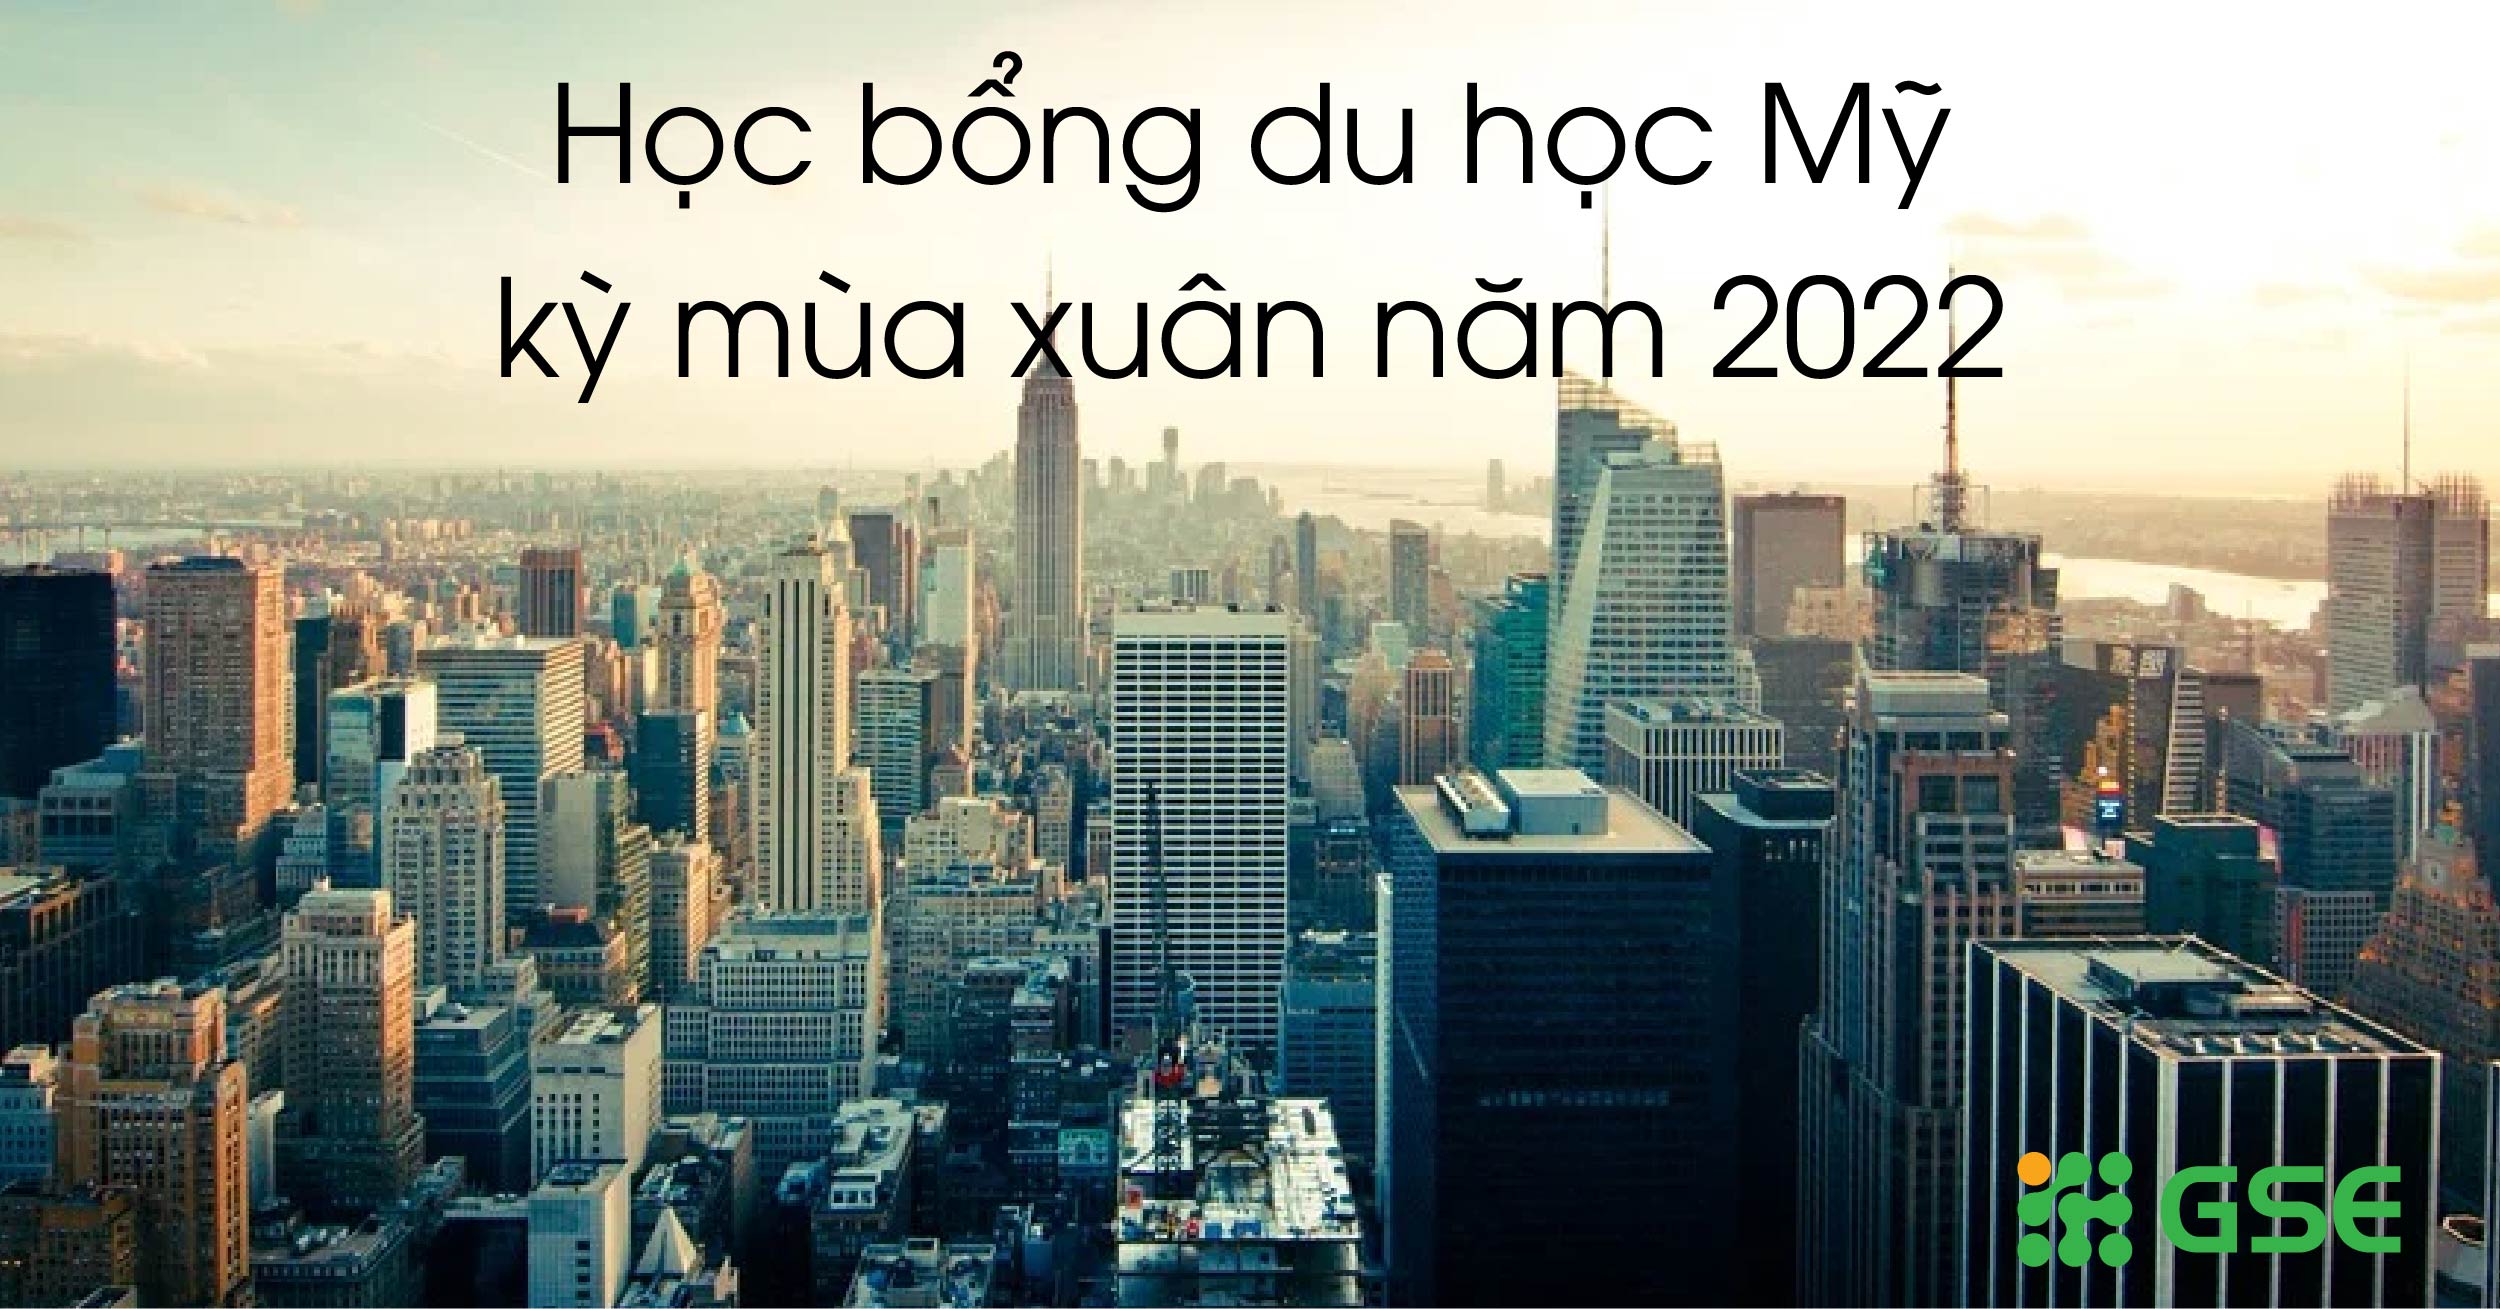 hoc bong my 2022 01